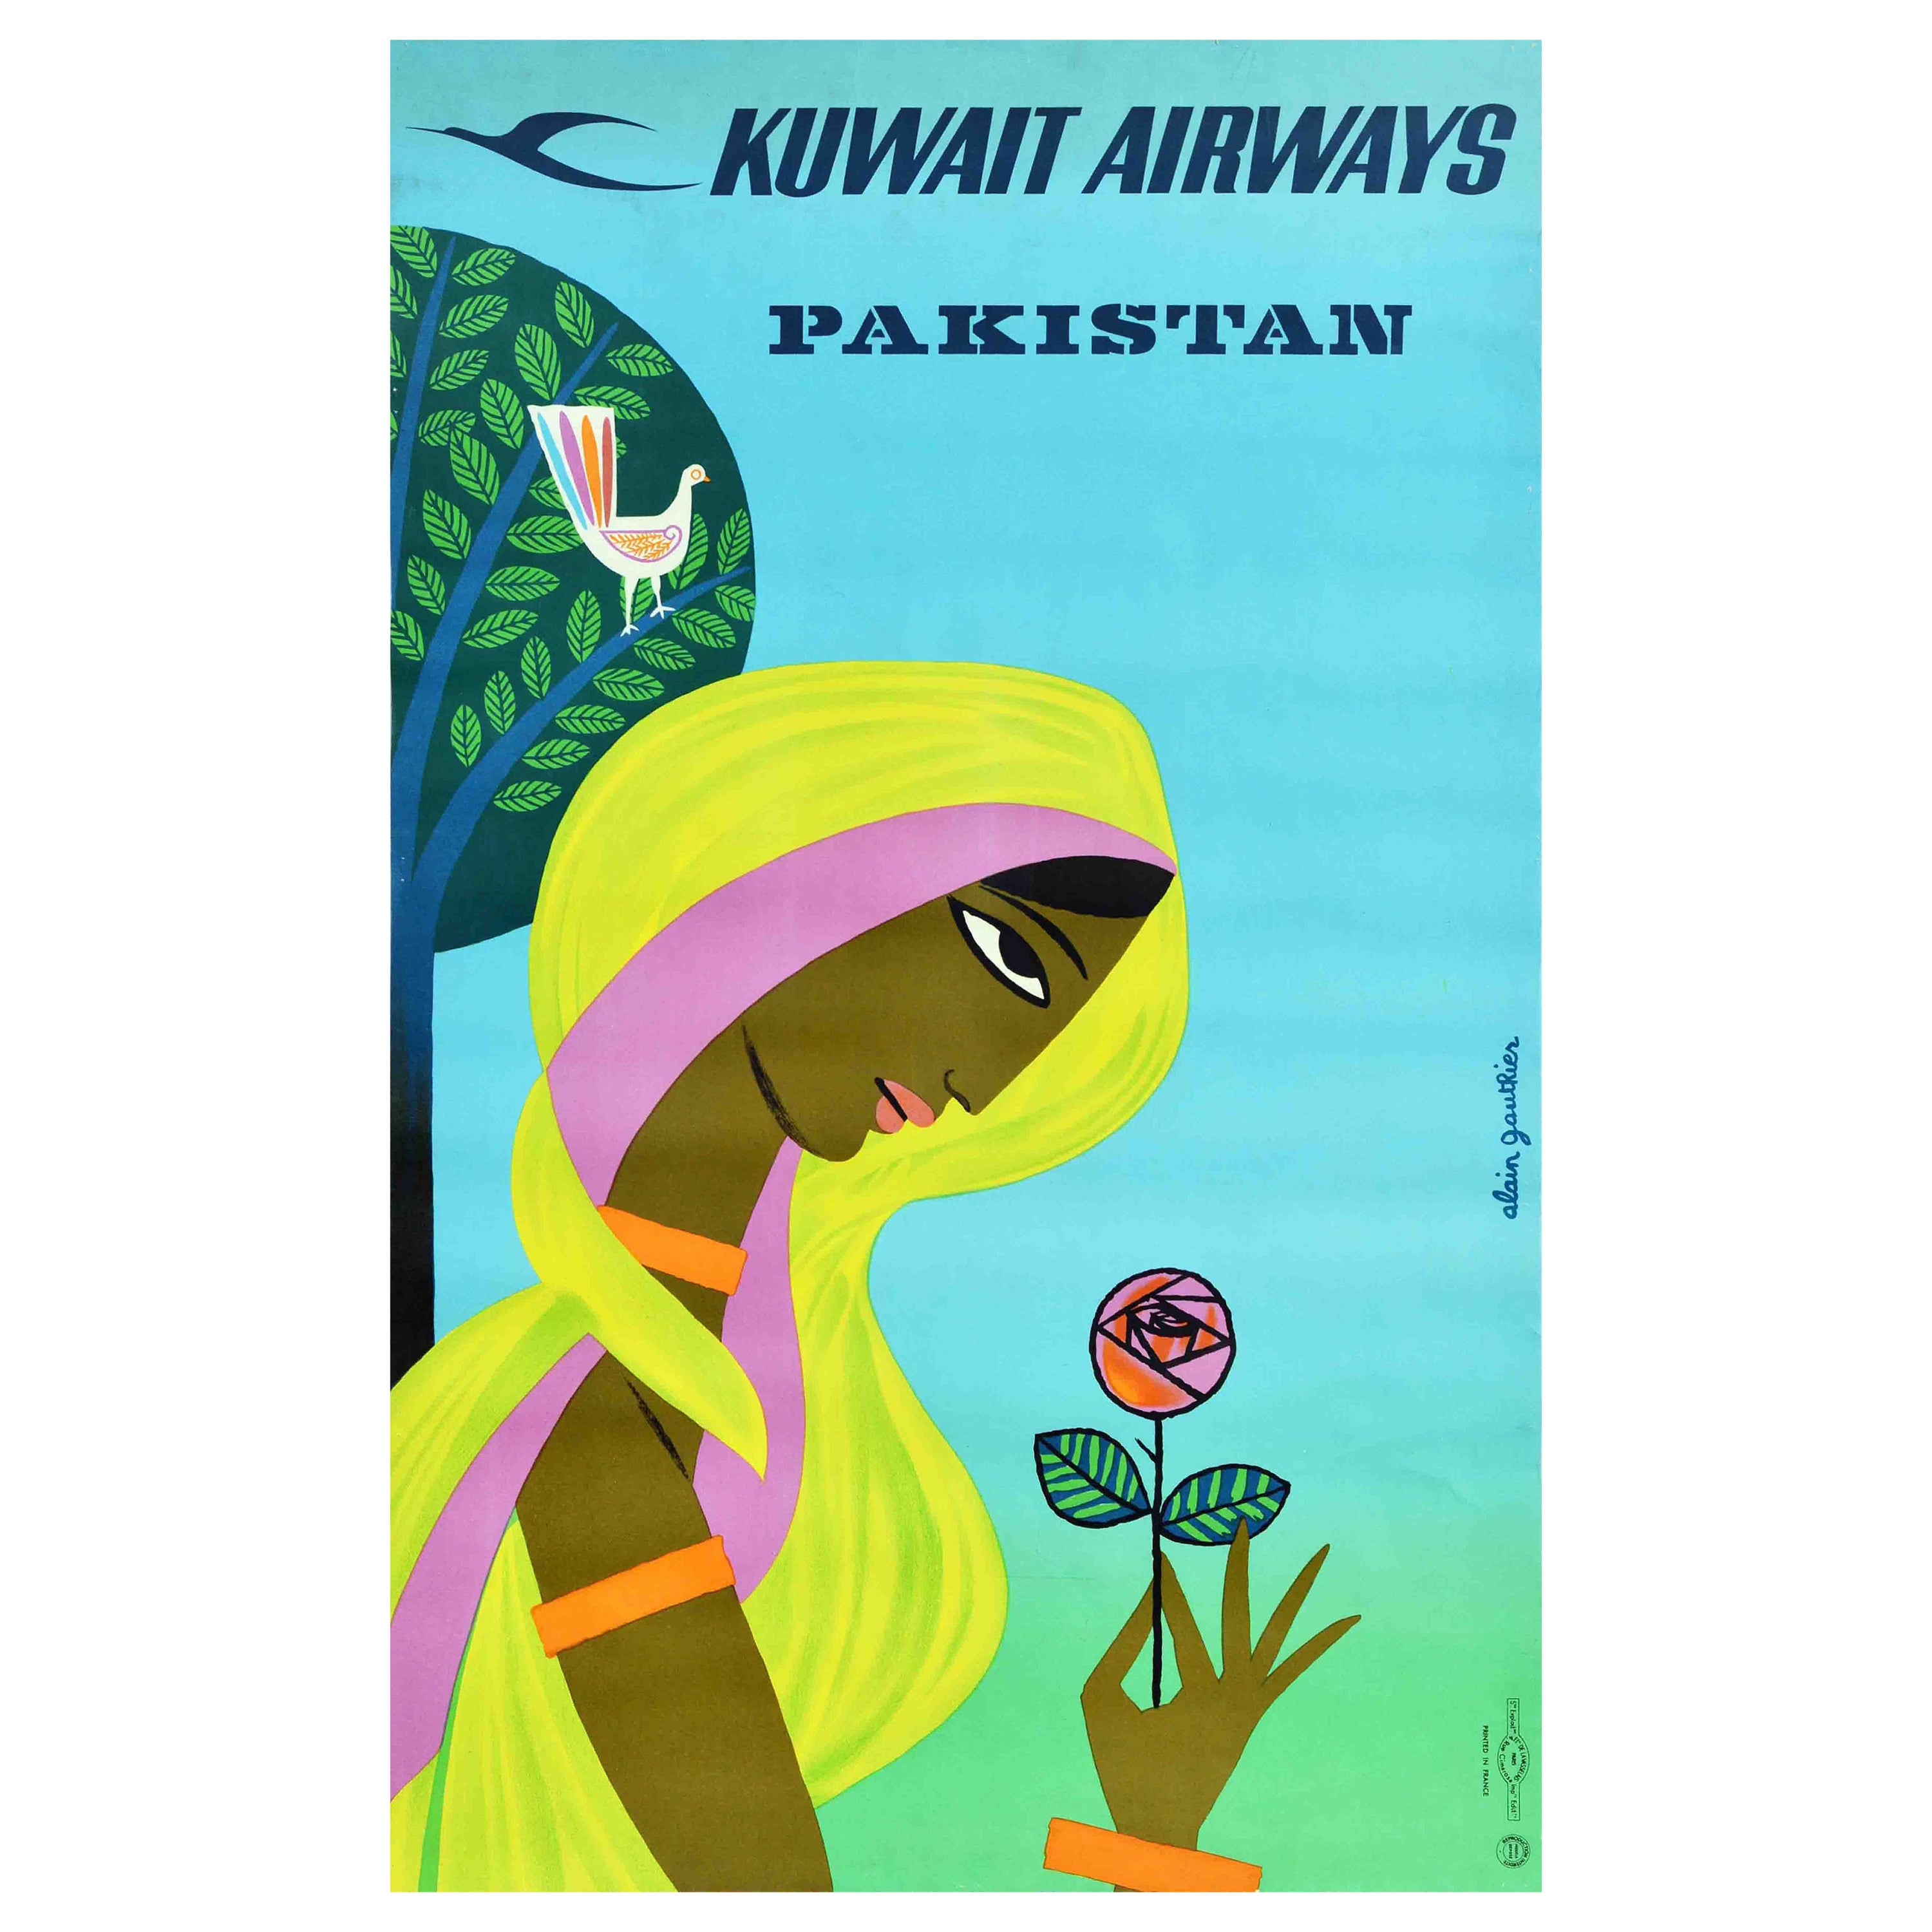 Original-Vintage-Reiseplakat Kuwait Airways Pakistan, Alain Gauthier, Design